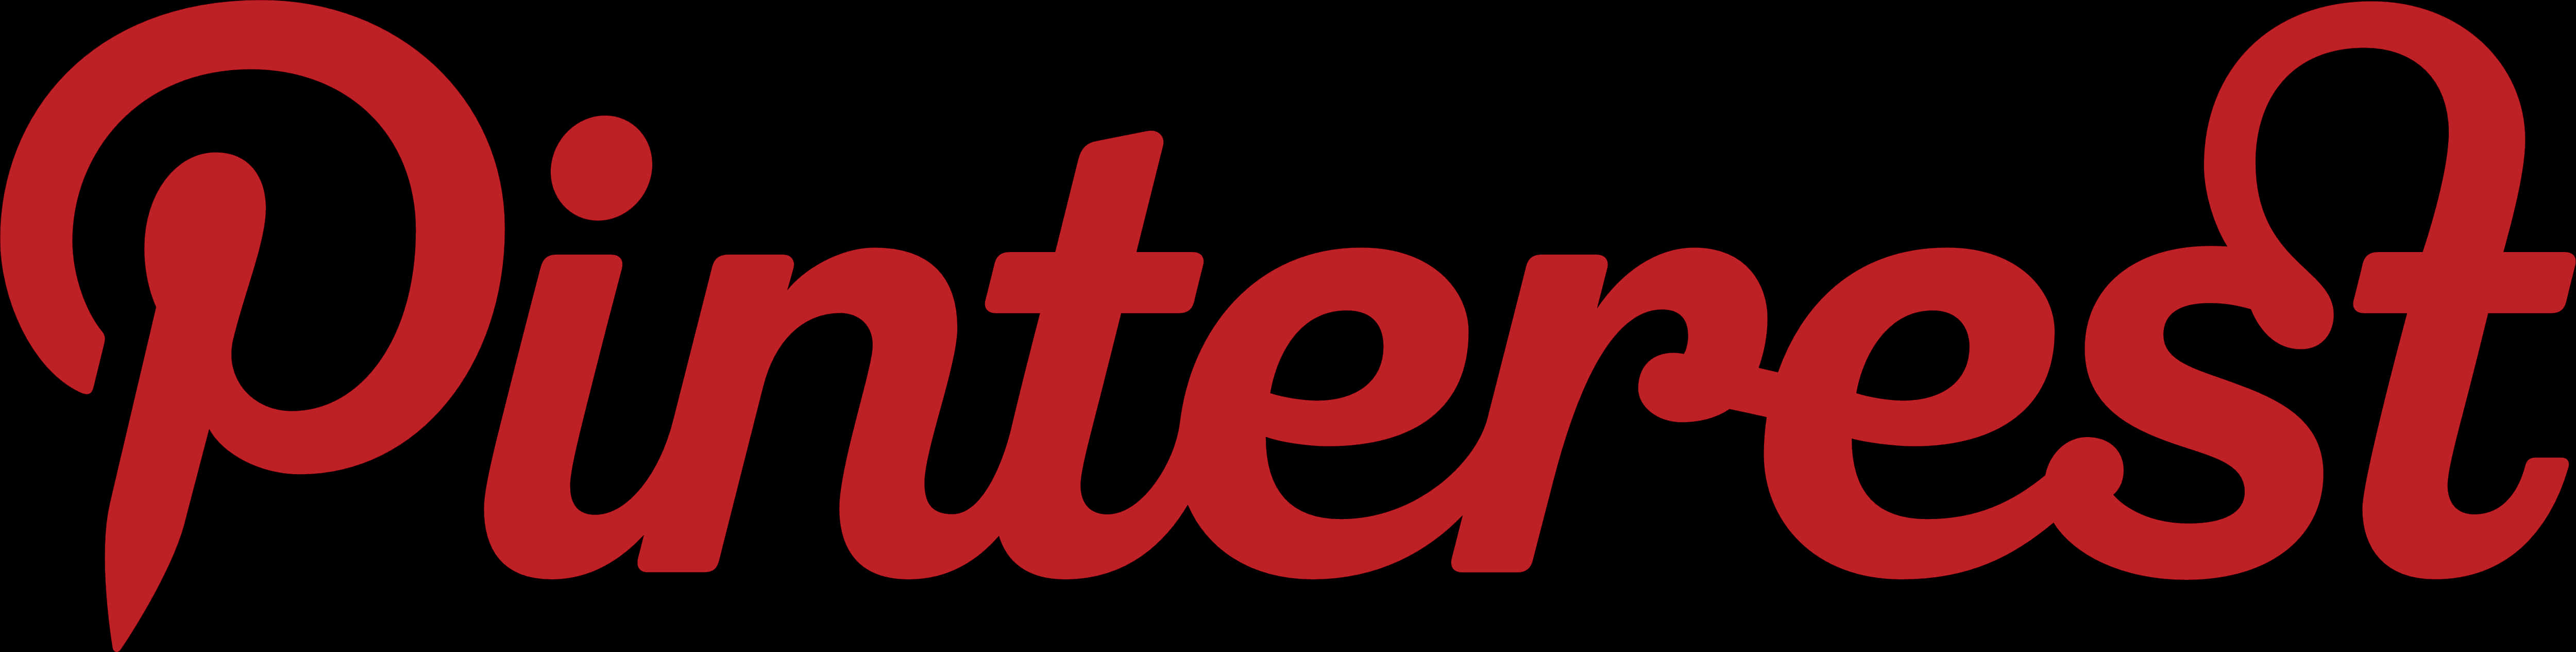 Pinterest Logo Red Script PNG